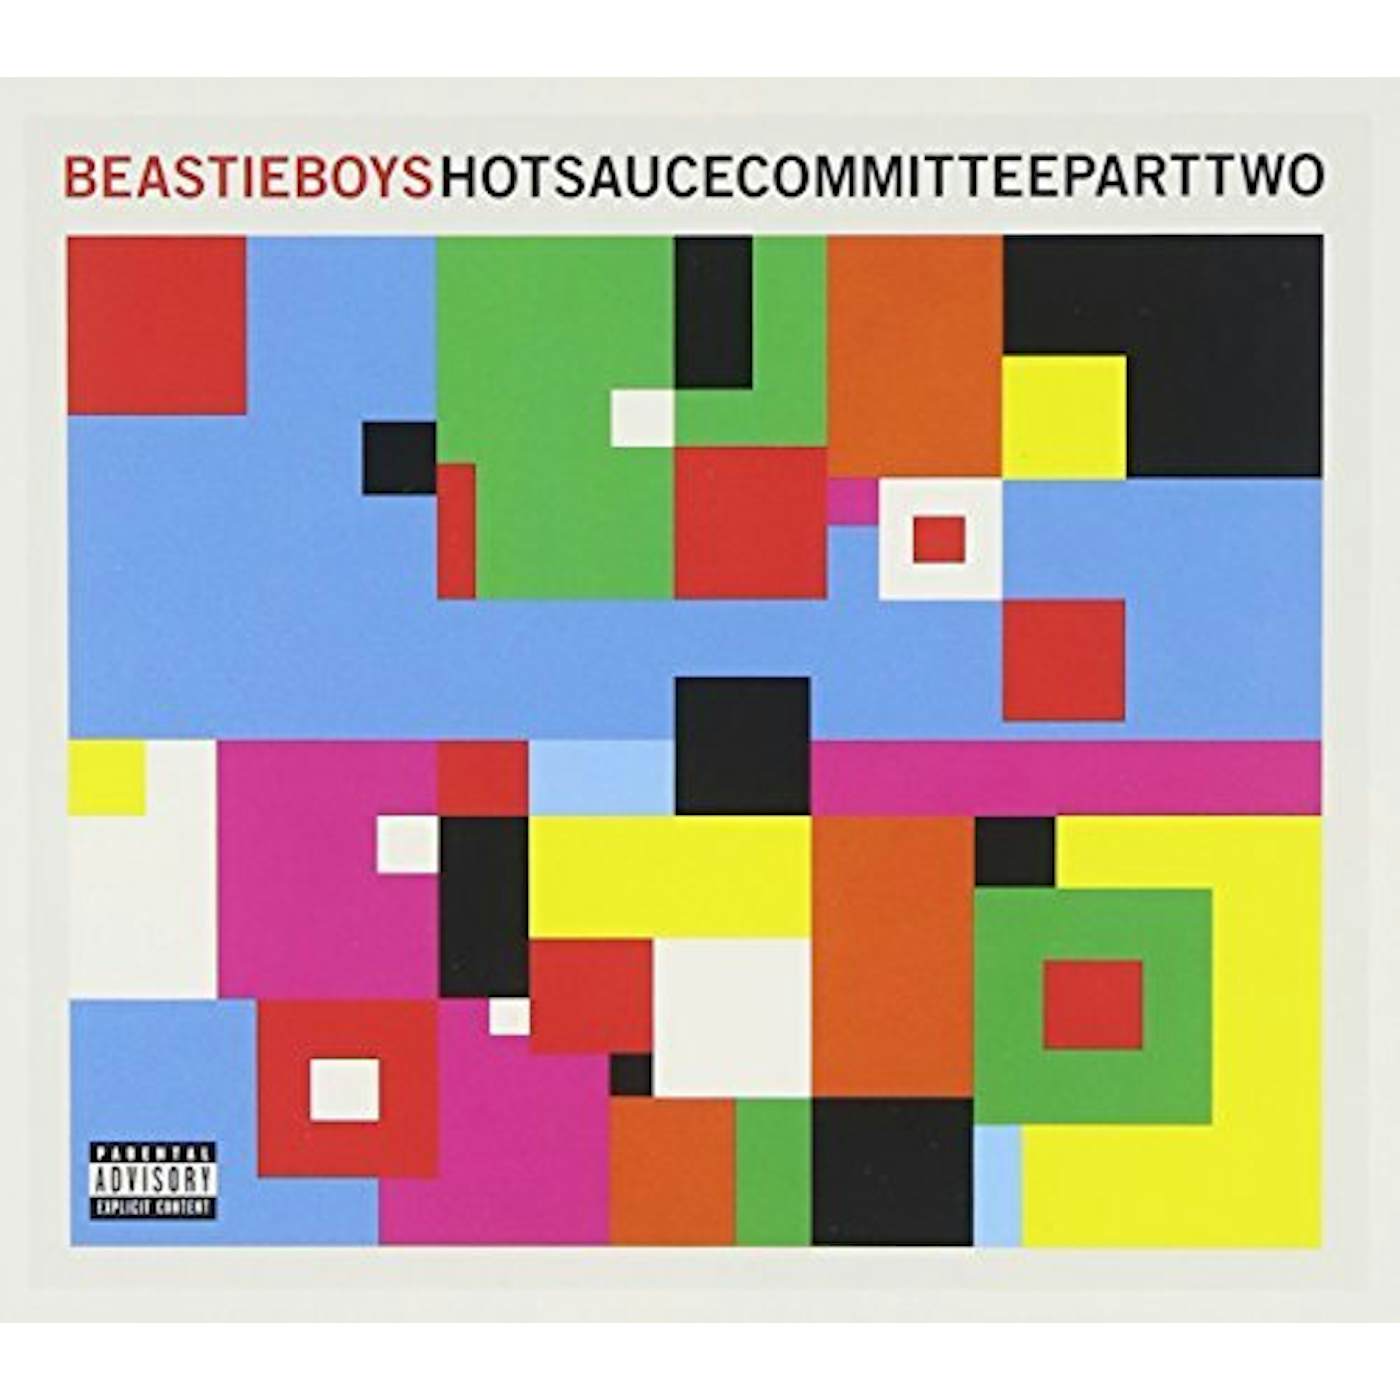 Beastie Boys Hot Sauce Committee Part Two Vinyl Record